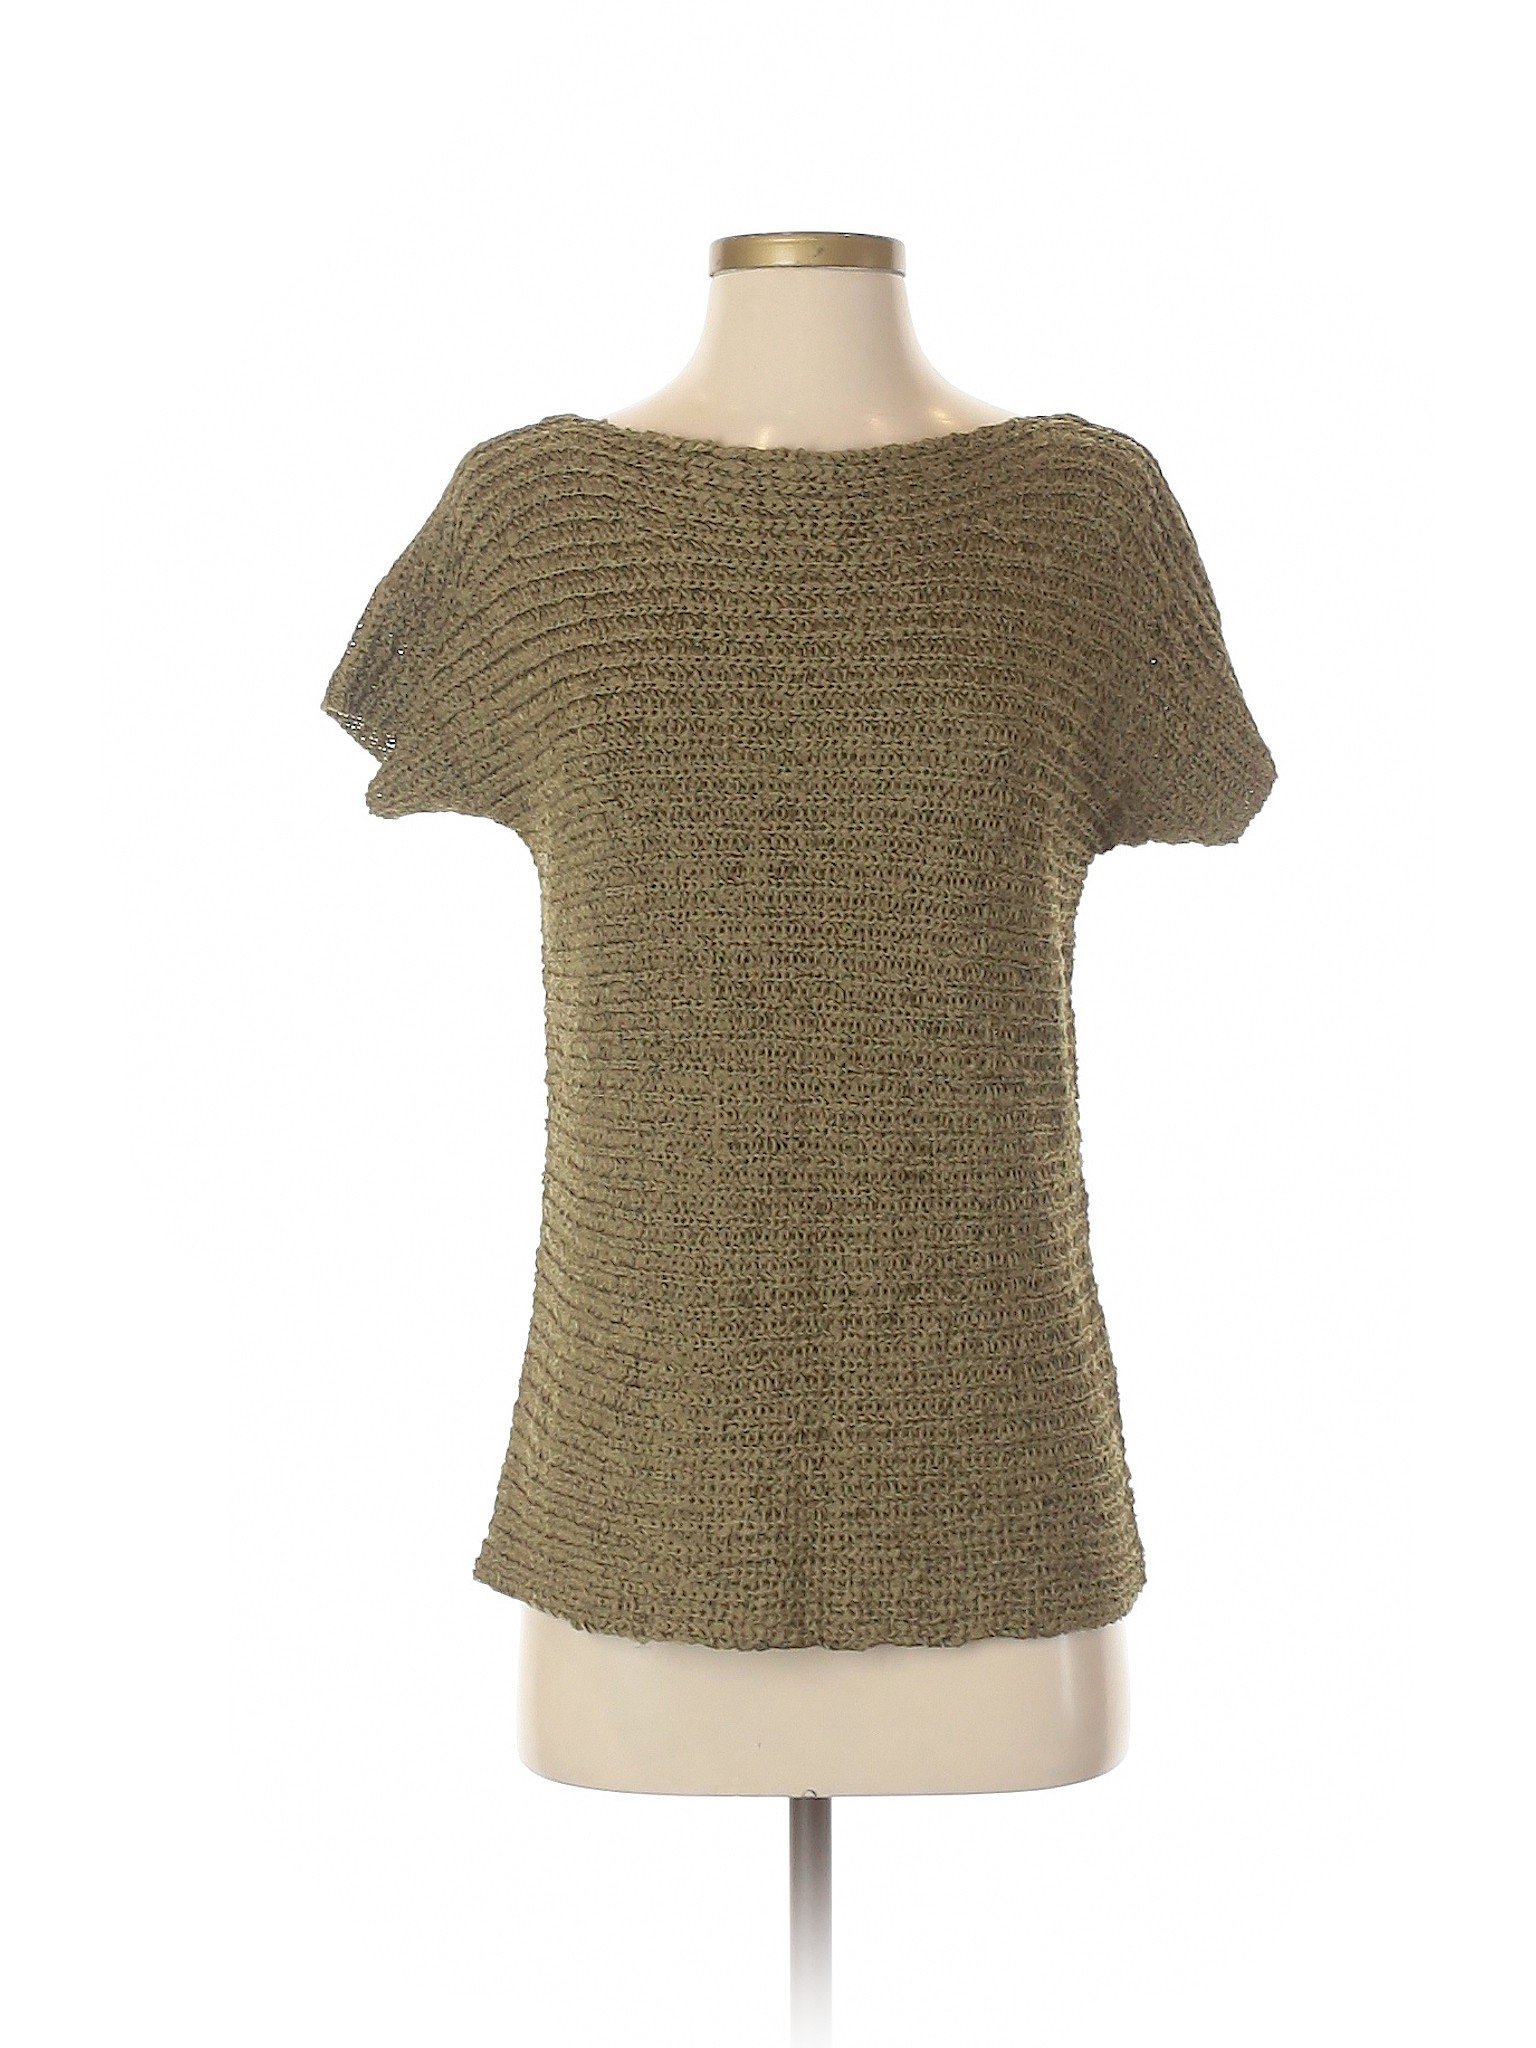 Lauren by Ralph Lauren Women Green Pullover Sweater XS | eBay